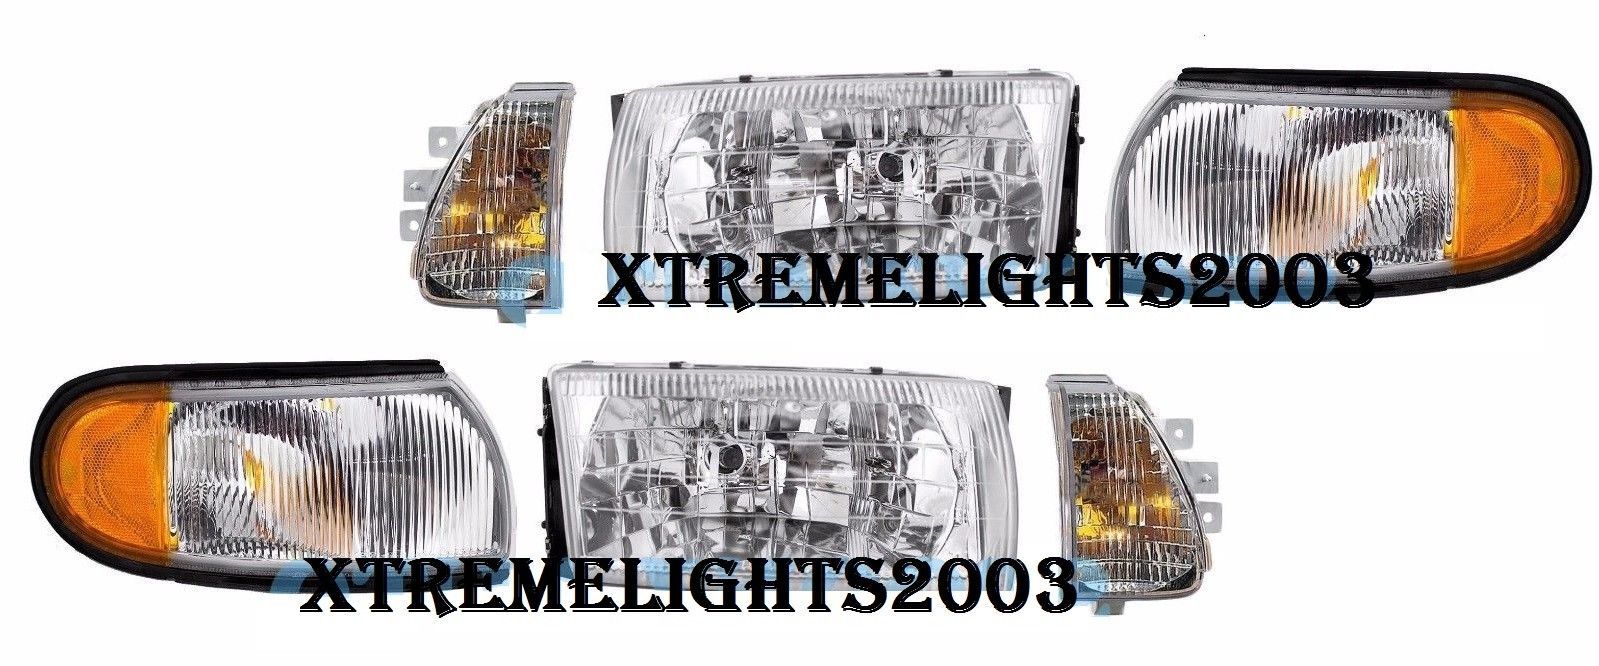 FLEETWOOD REVOLUTION 2008 2009 LEFT DRIVER HEADLIGHT HEAD LIGHT FRONT LAMP RV